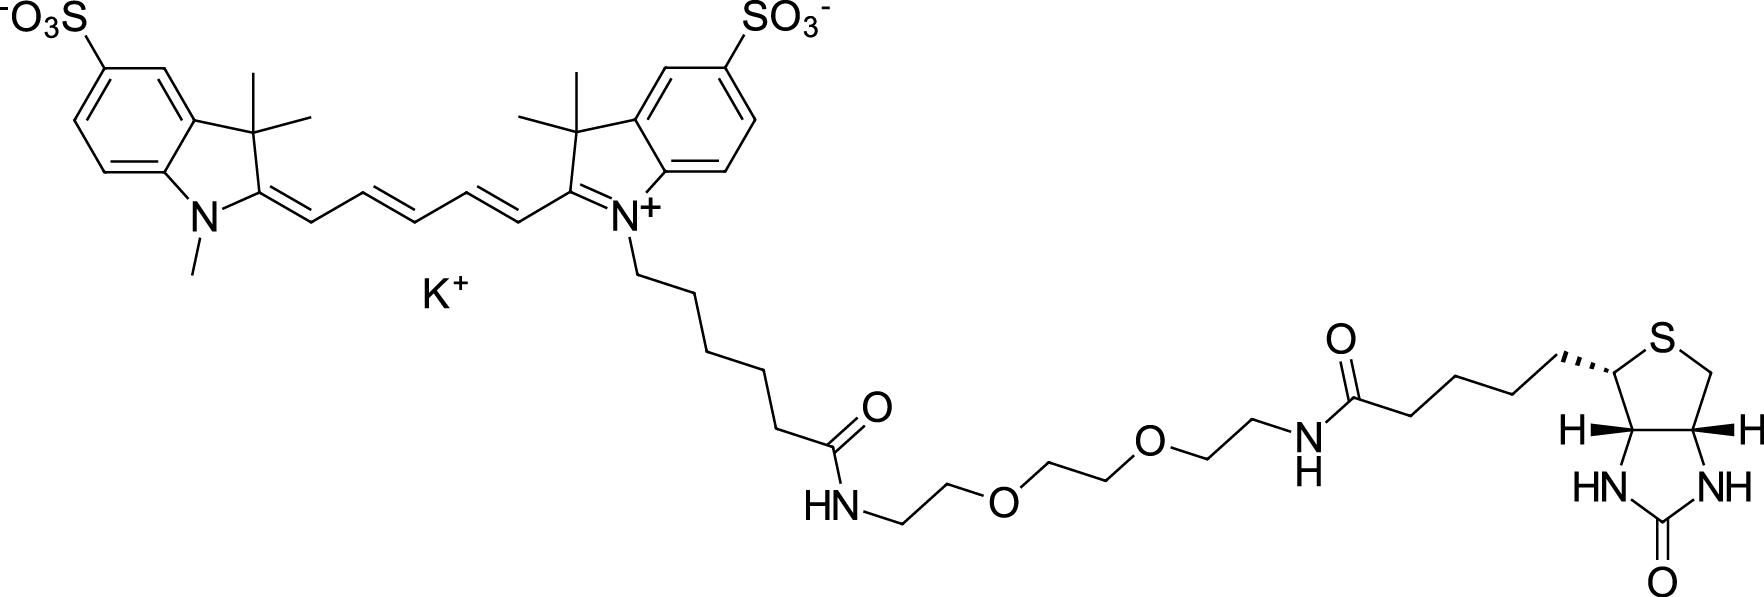 Sulfo-Cyanine5-PEG3-Biotin  Chemical Structure